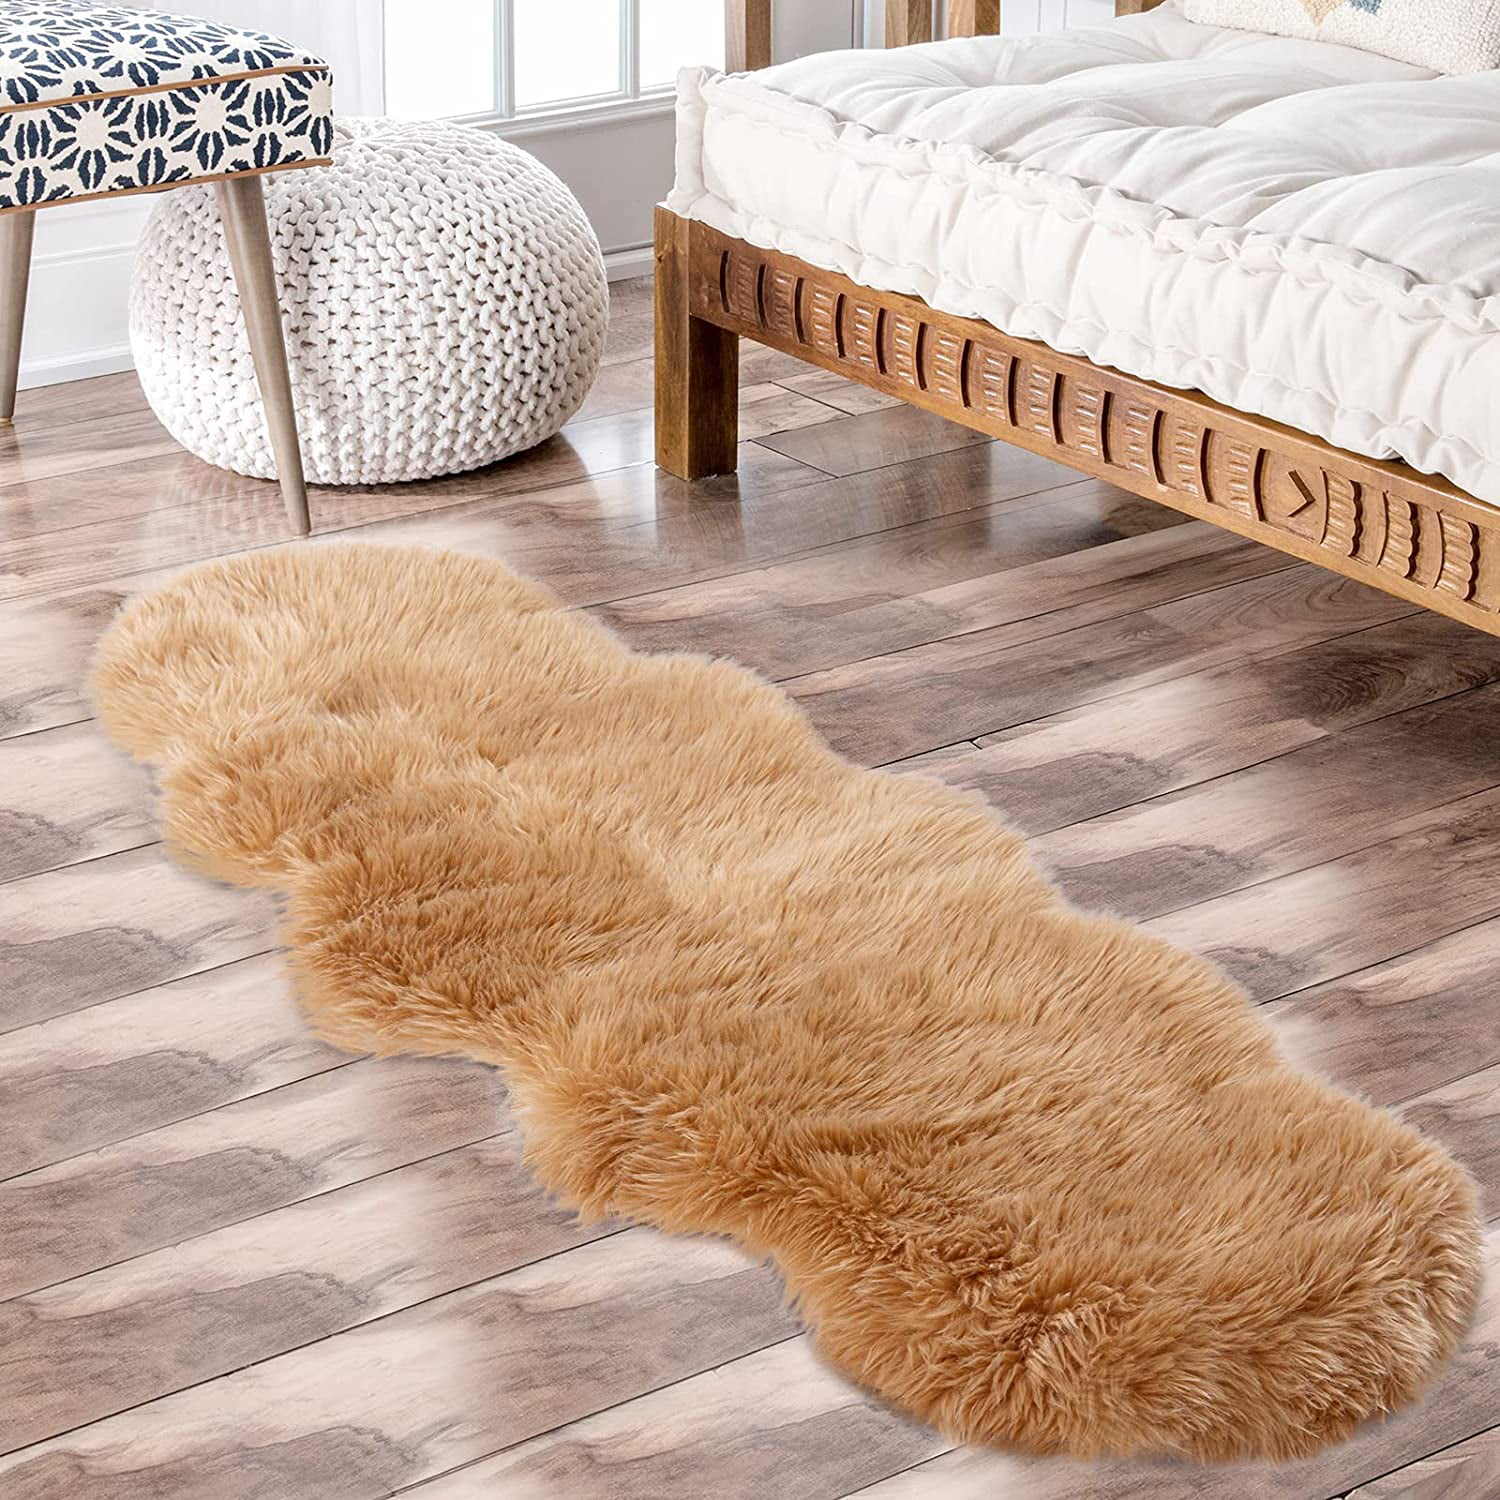 Carvapet Fluffy Shaggy Soft Faux Sheepskin Fur Area Rugs Floor Mat For Bedroom 